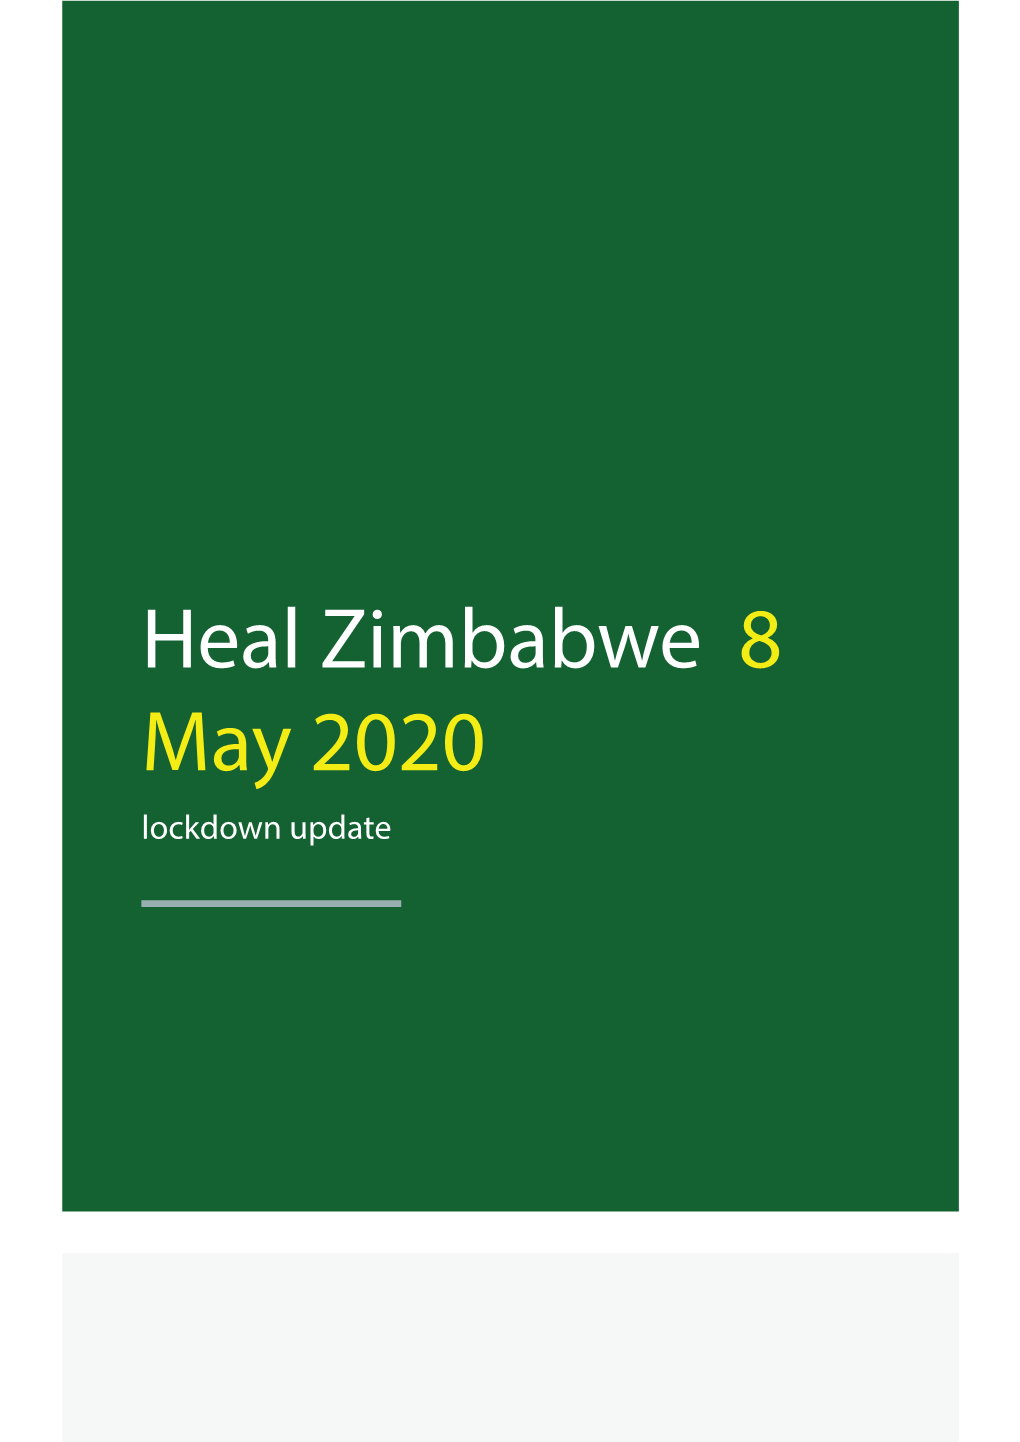 Heal Zimbabwe 8 May 2020 Lockdown Update Introduction